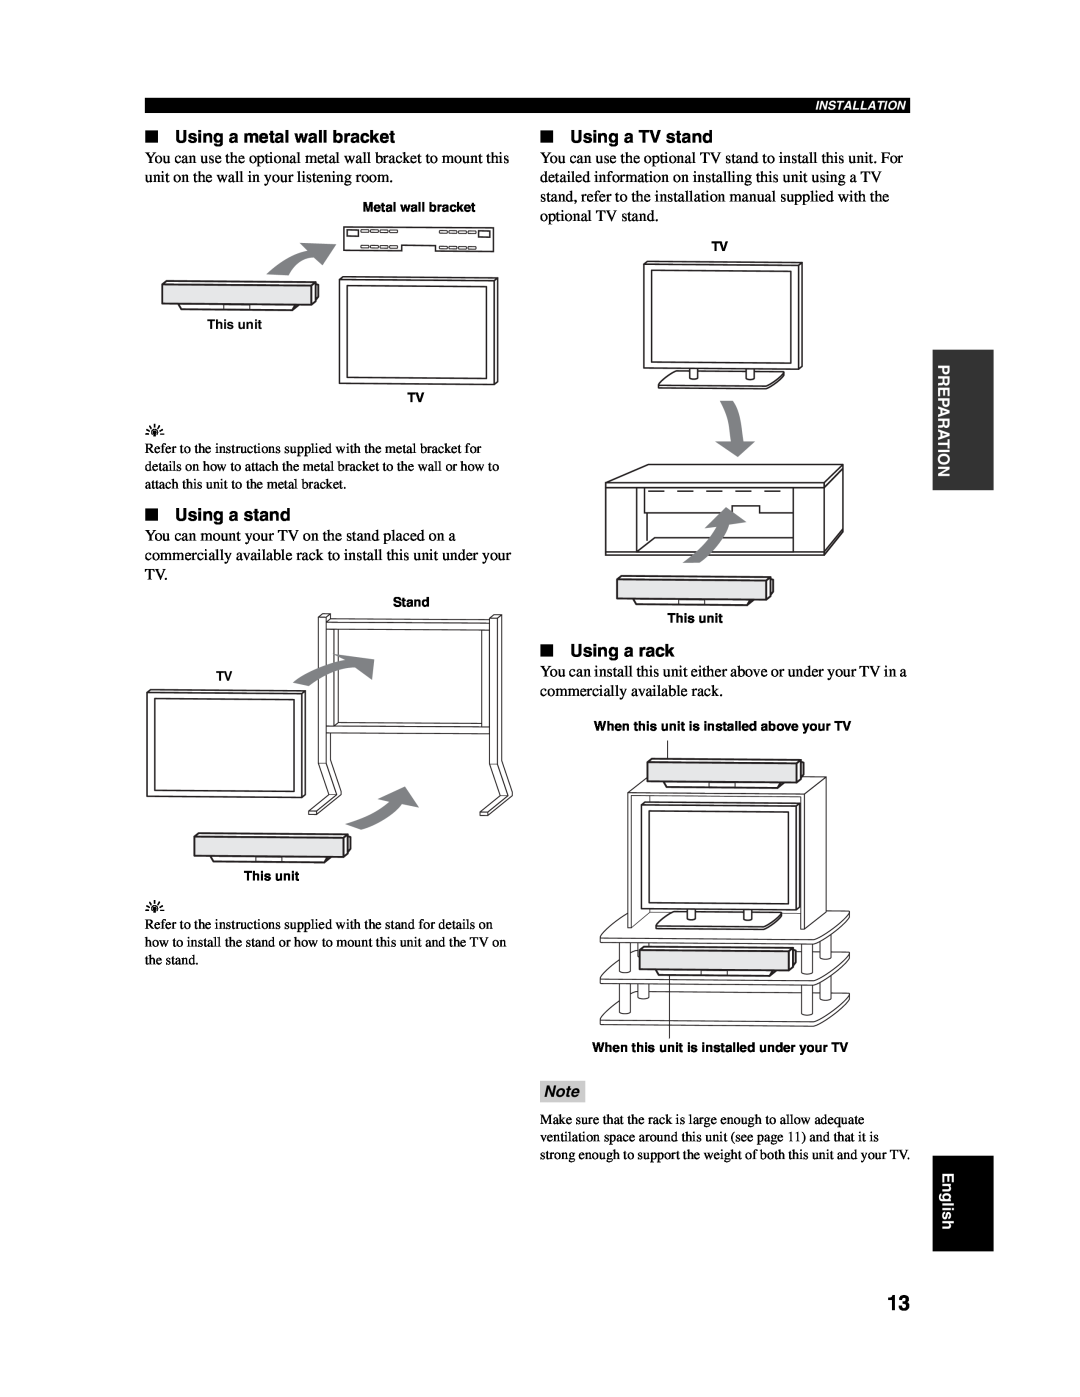 Yamaha YSP-1000 Using a metal wall bracket, Using a stand, Using a TV stand, Using a rack, Metal wall bracket This unit TV 